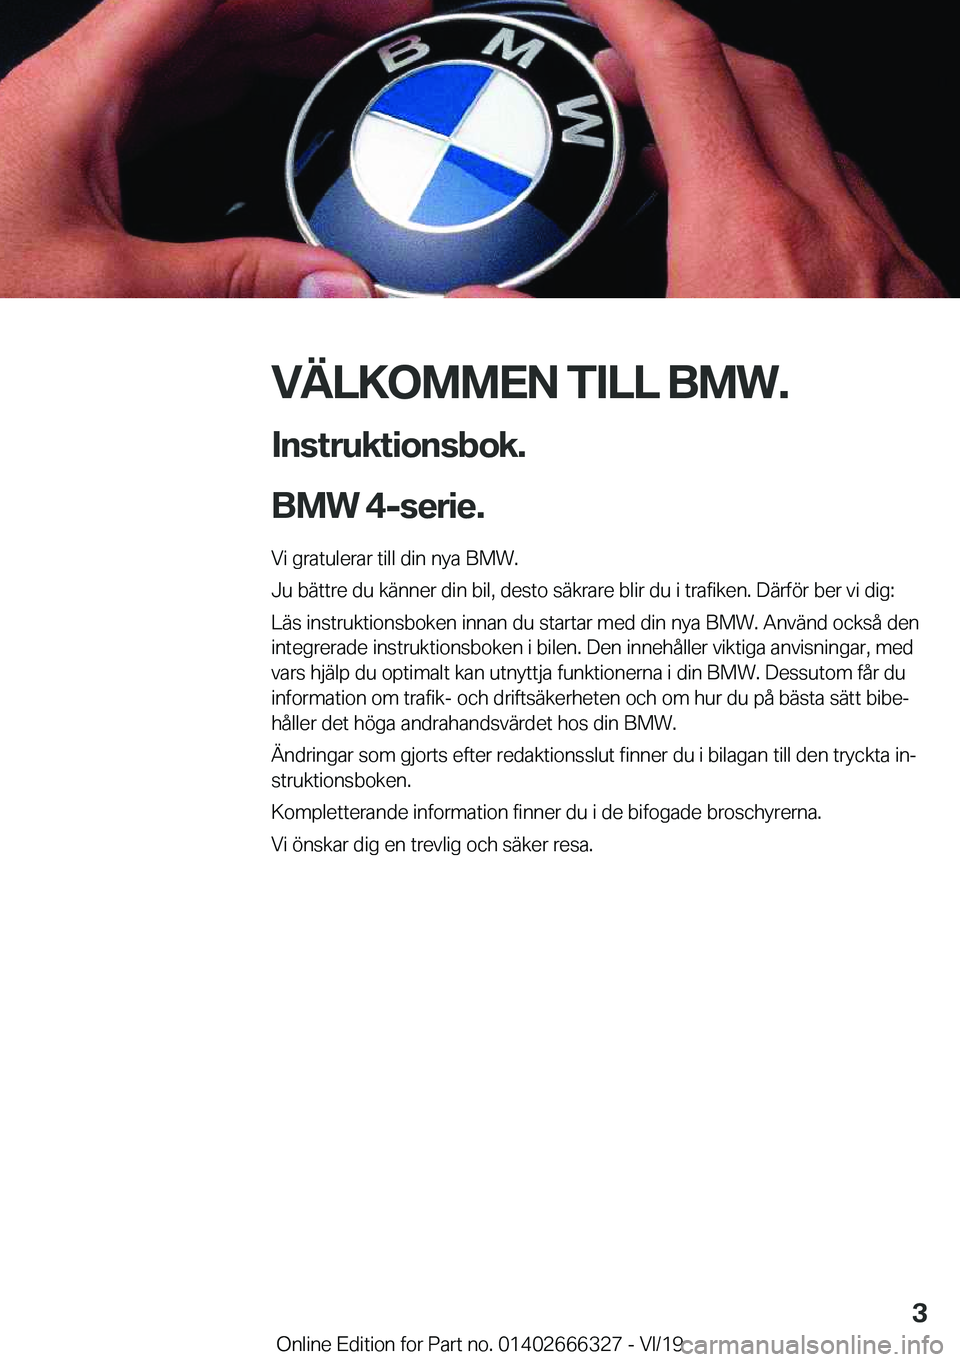 BMW 4 SERIES COUPE 2020  InstruktionsbÖcker (in Swedish) �V�Ä�L�K�O�M�M�E�N��T�I�L�L��B�M�W�.�I�n�s�t�r�u�k�t�i�o�n�s�b�o�k�.
�B�M�W��4�-�s�e�r�i�e�.�
�V�i��g�r�a�t�u�l�e�r�a�r��t�i�l�l��d�i�n��n�y�a��B�M�W�.
�J�u��b�ä�t�t�r�e��d�u��k�ä�n�n�e